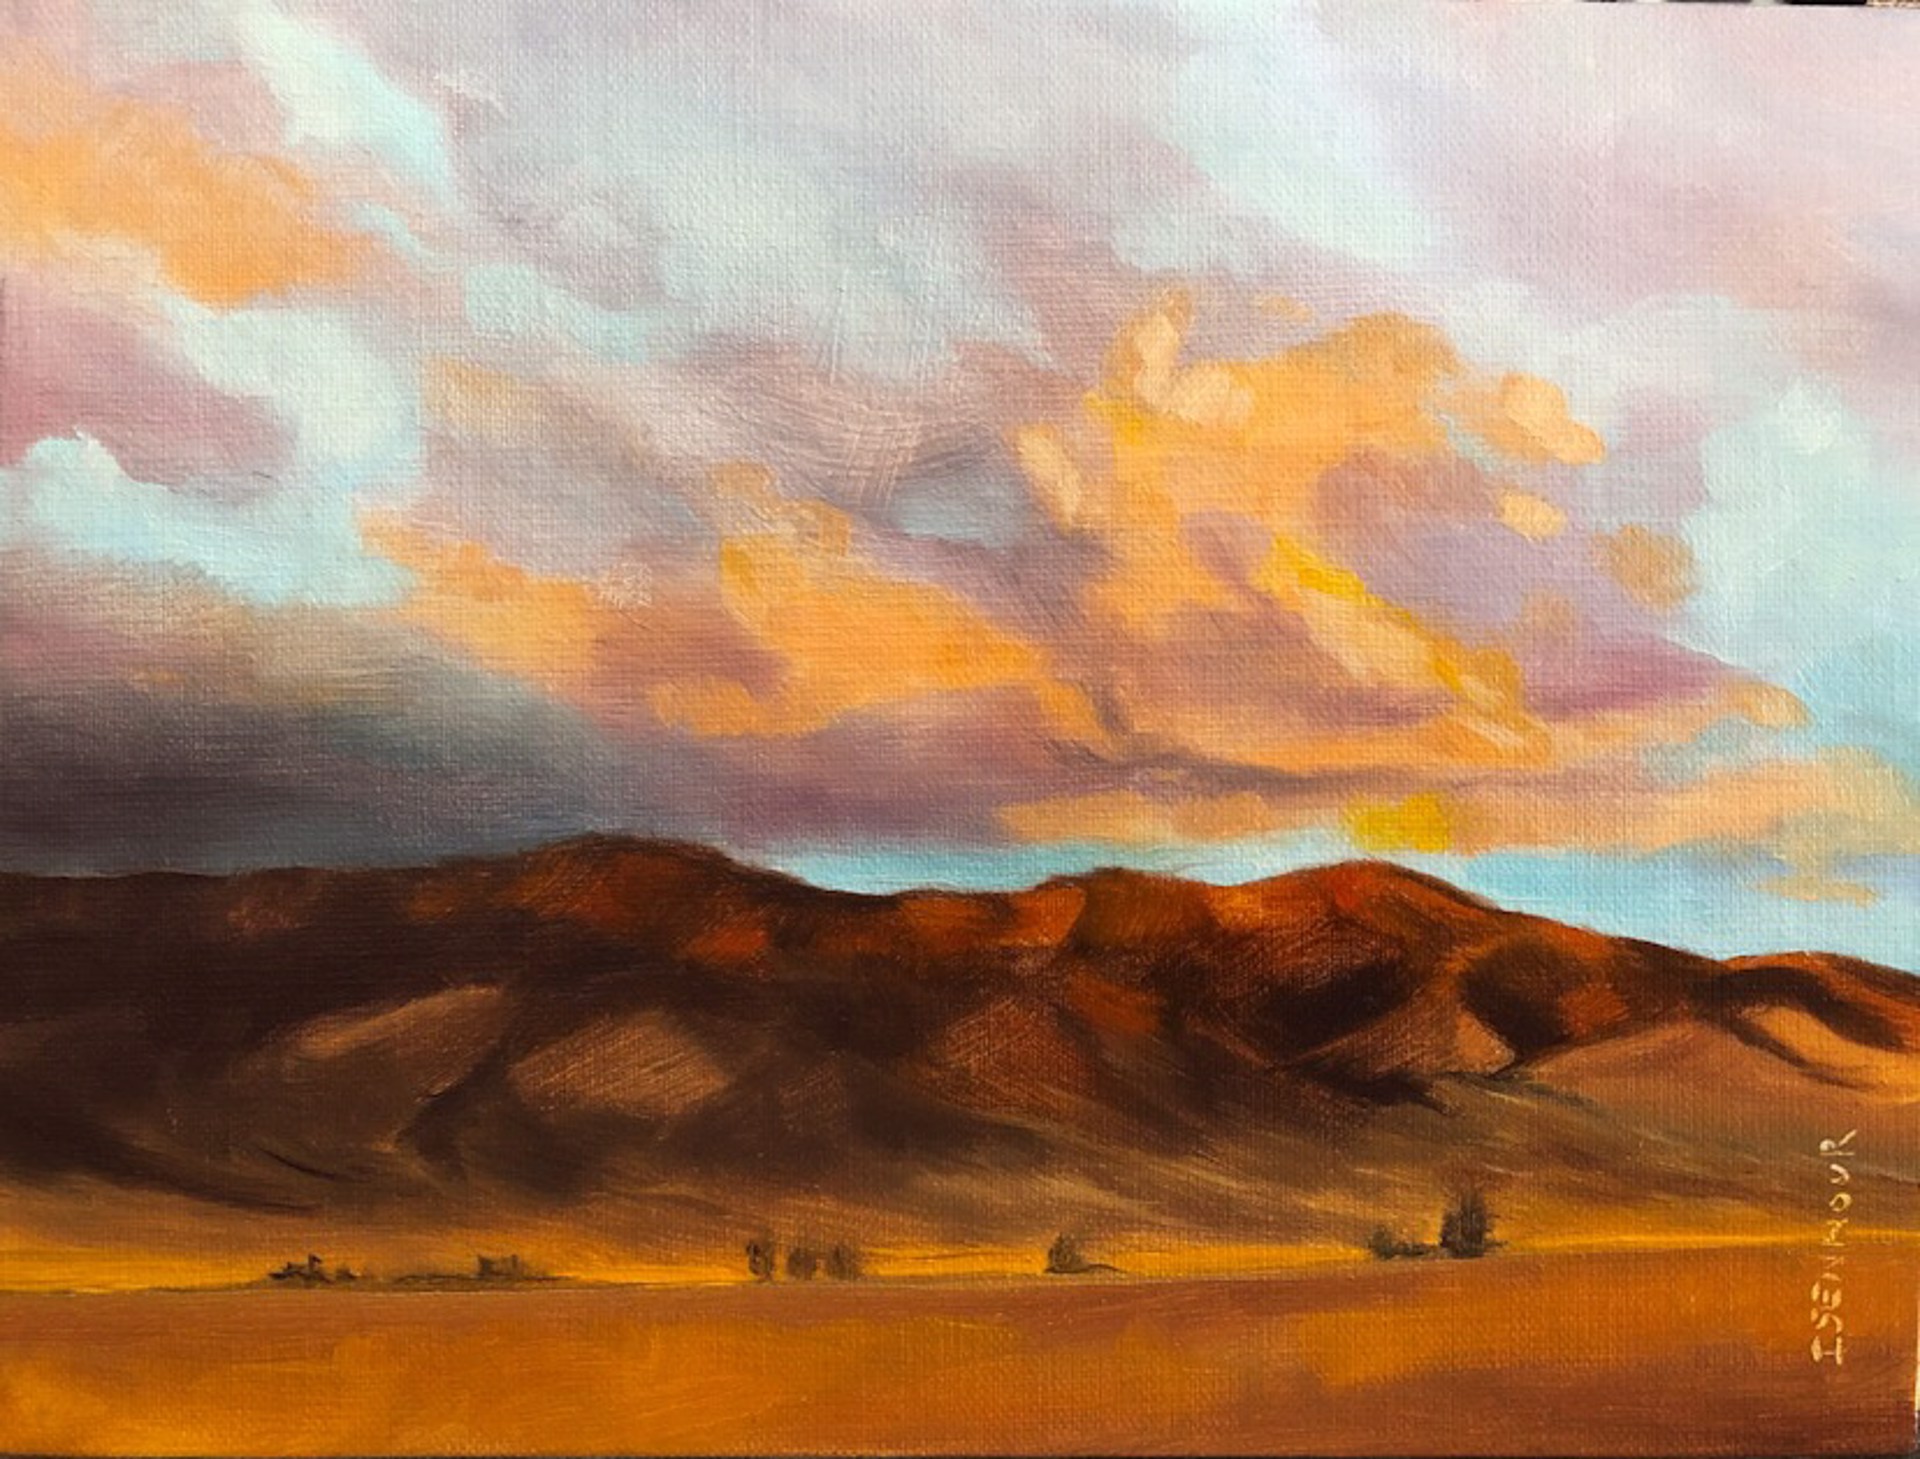 Morning in the High Desert by Natasha Isenhour